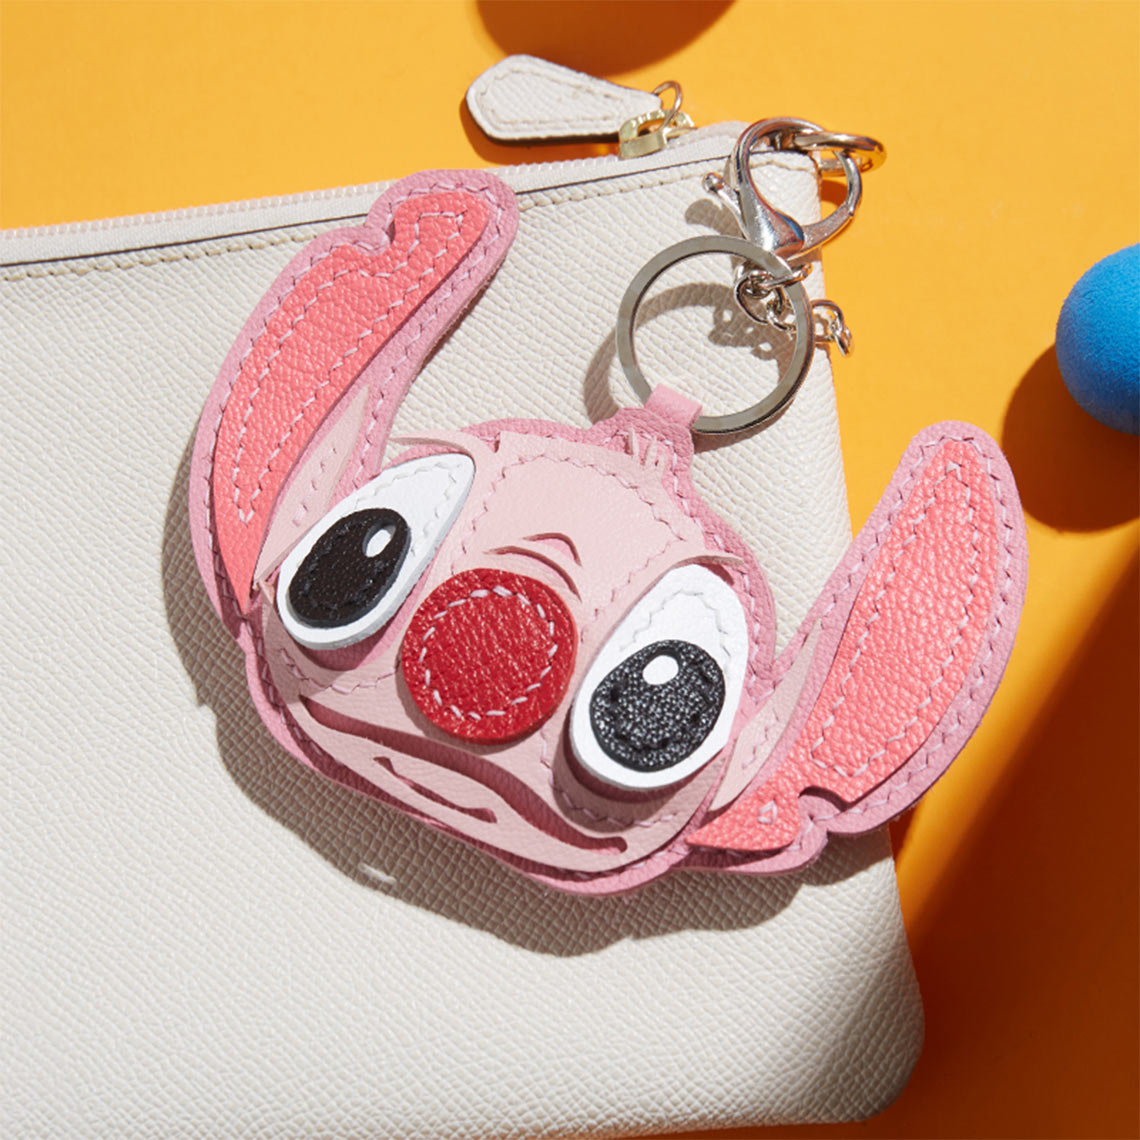 DIY backpack keychains | Handmade cartoon bag charms | Cute bag charms